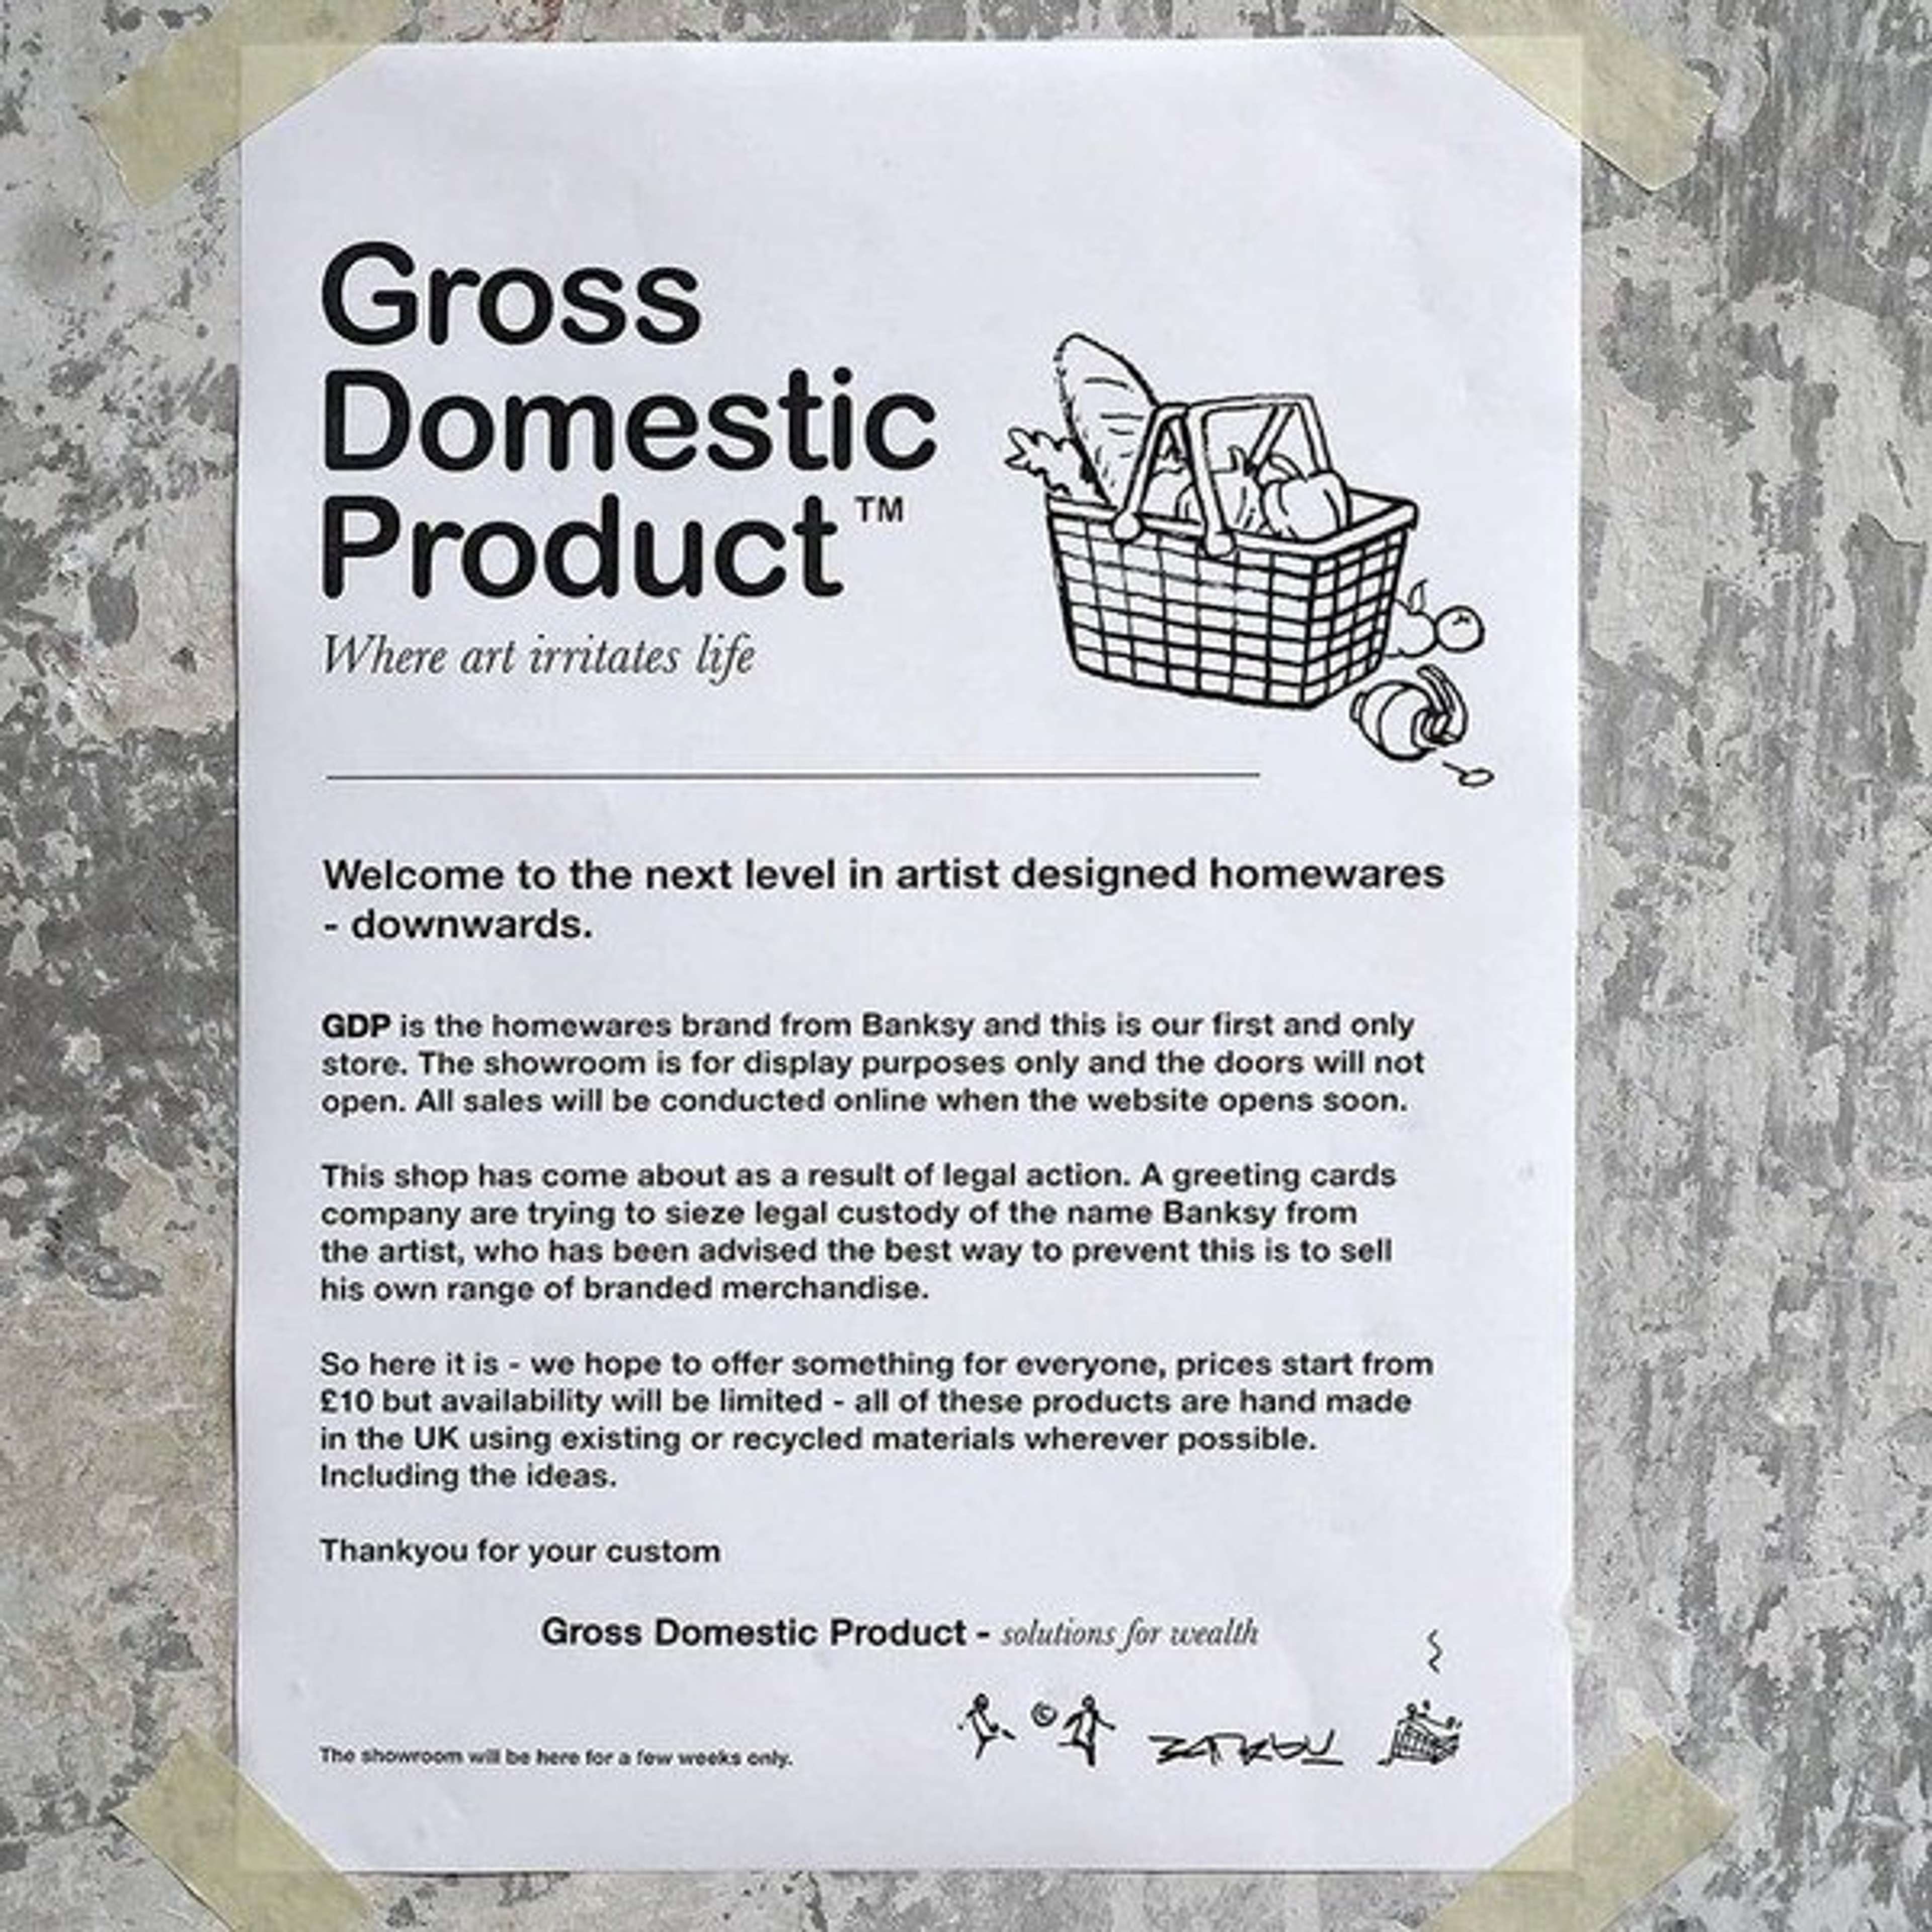 Gross Domestic Product - MyArtBroker